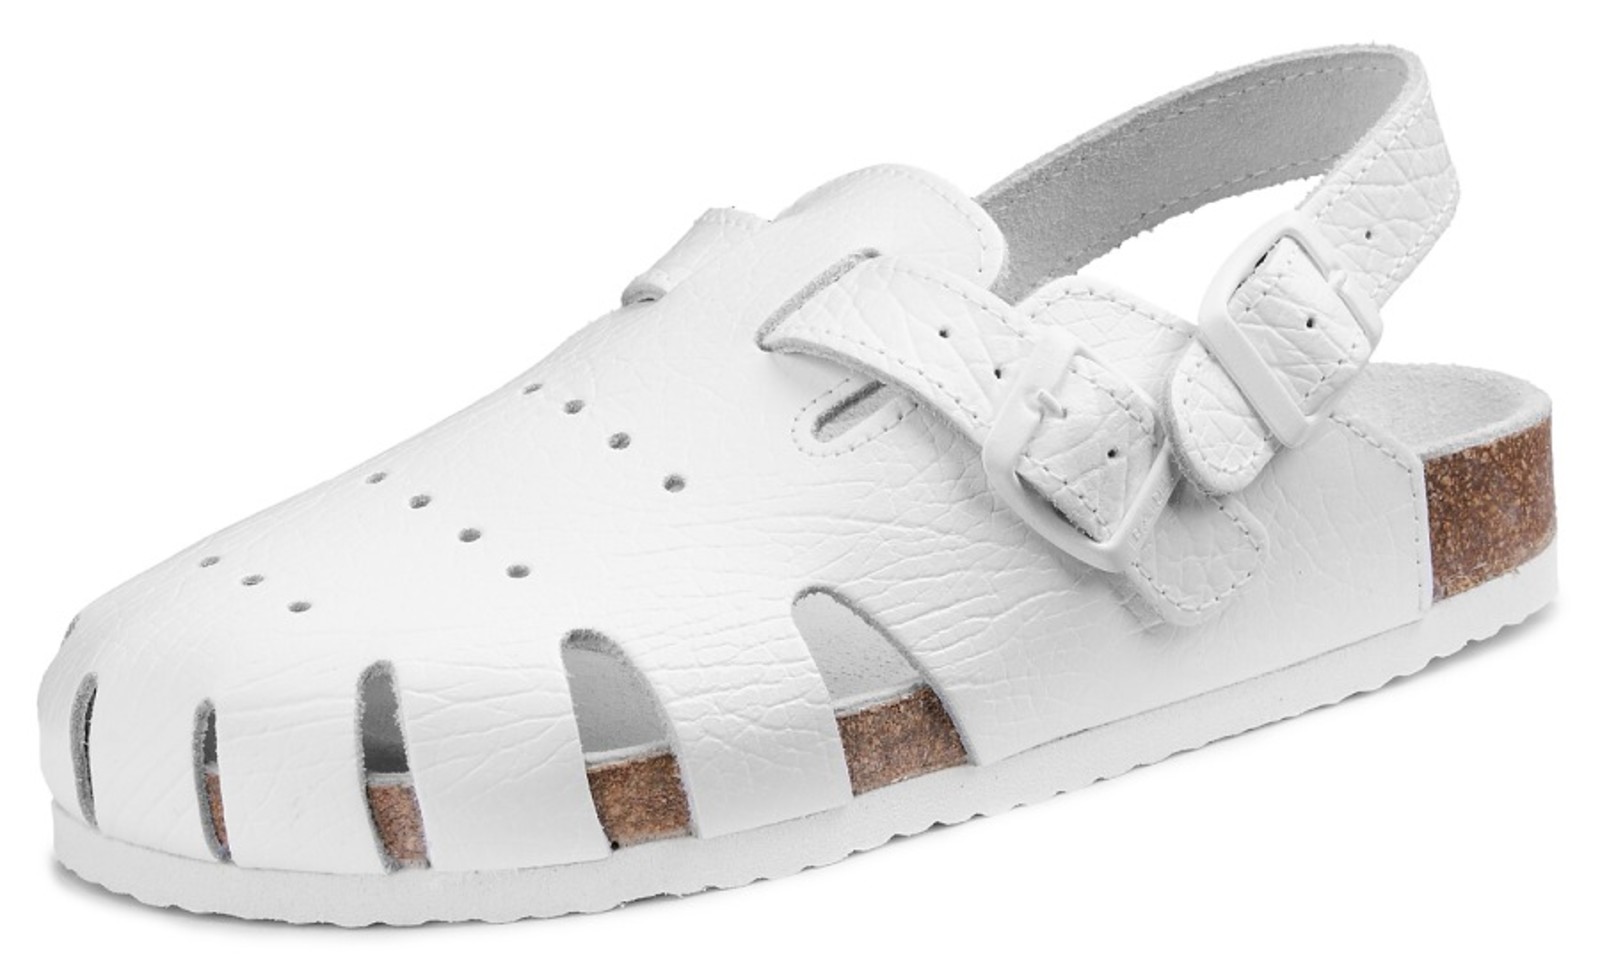 Ortopedické sandále Barea 090520 - veľkosť: 46, farba: biela